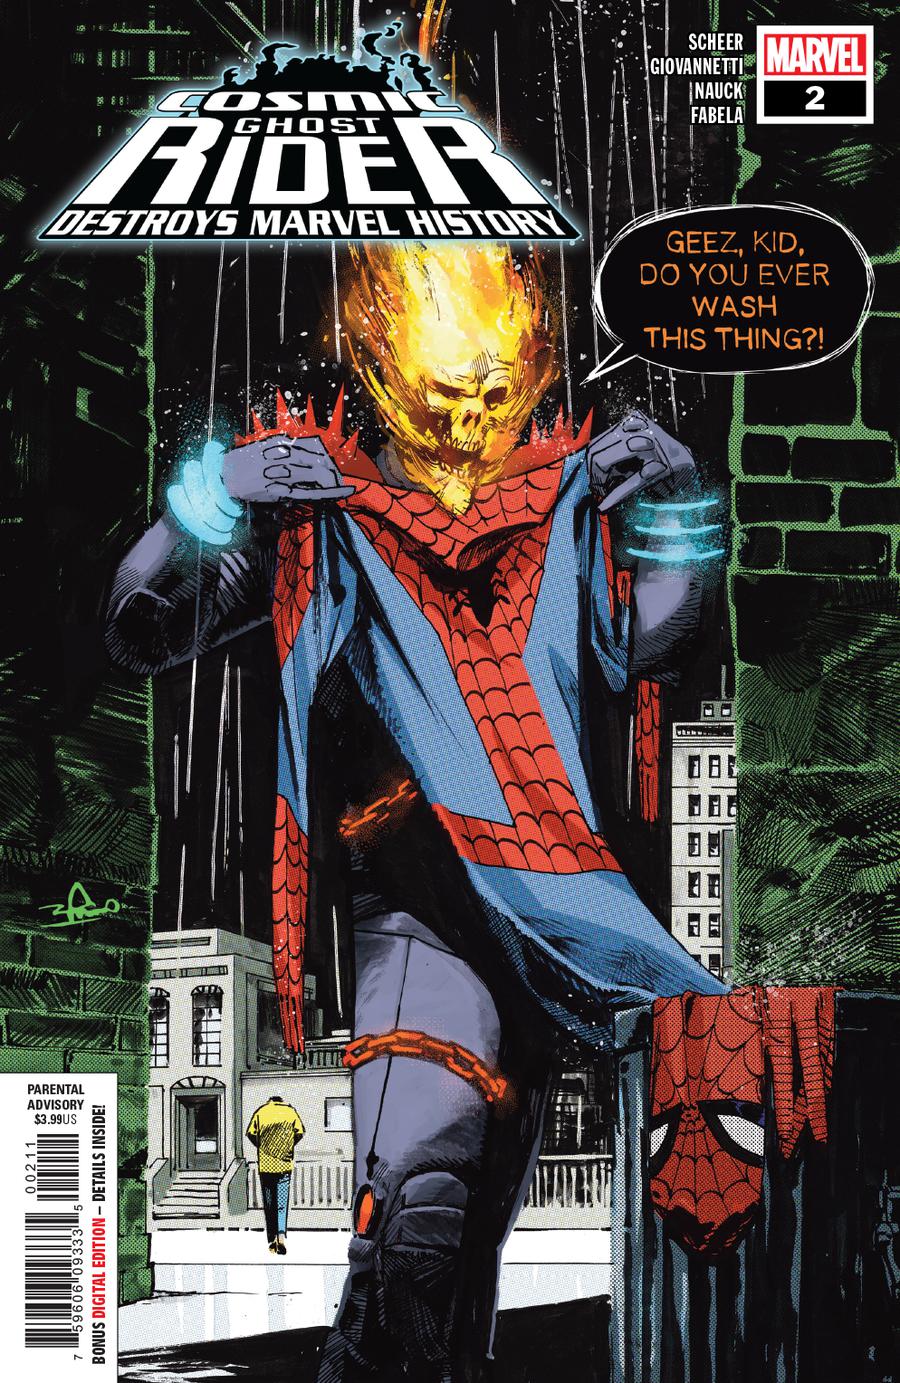 Cosmic Ghost Rider Destroys Marvel History #2 Cover A 1st Ptg Regular Gerardo Zaffino Cover